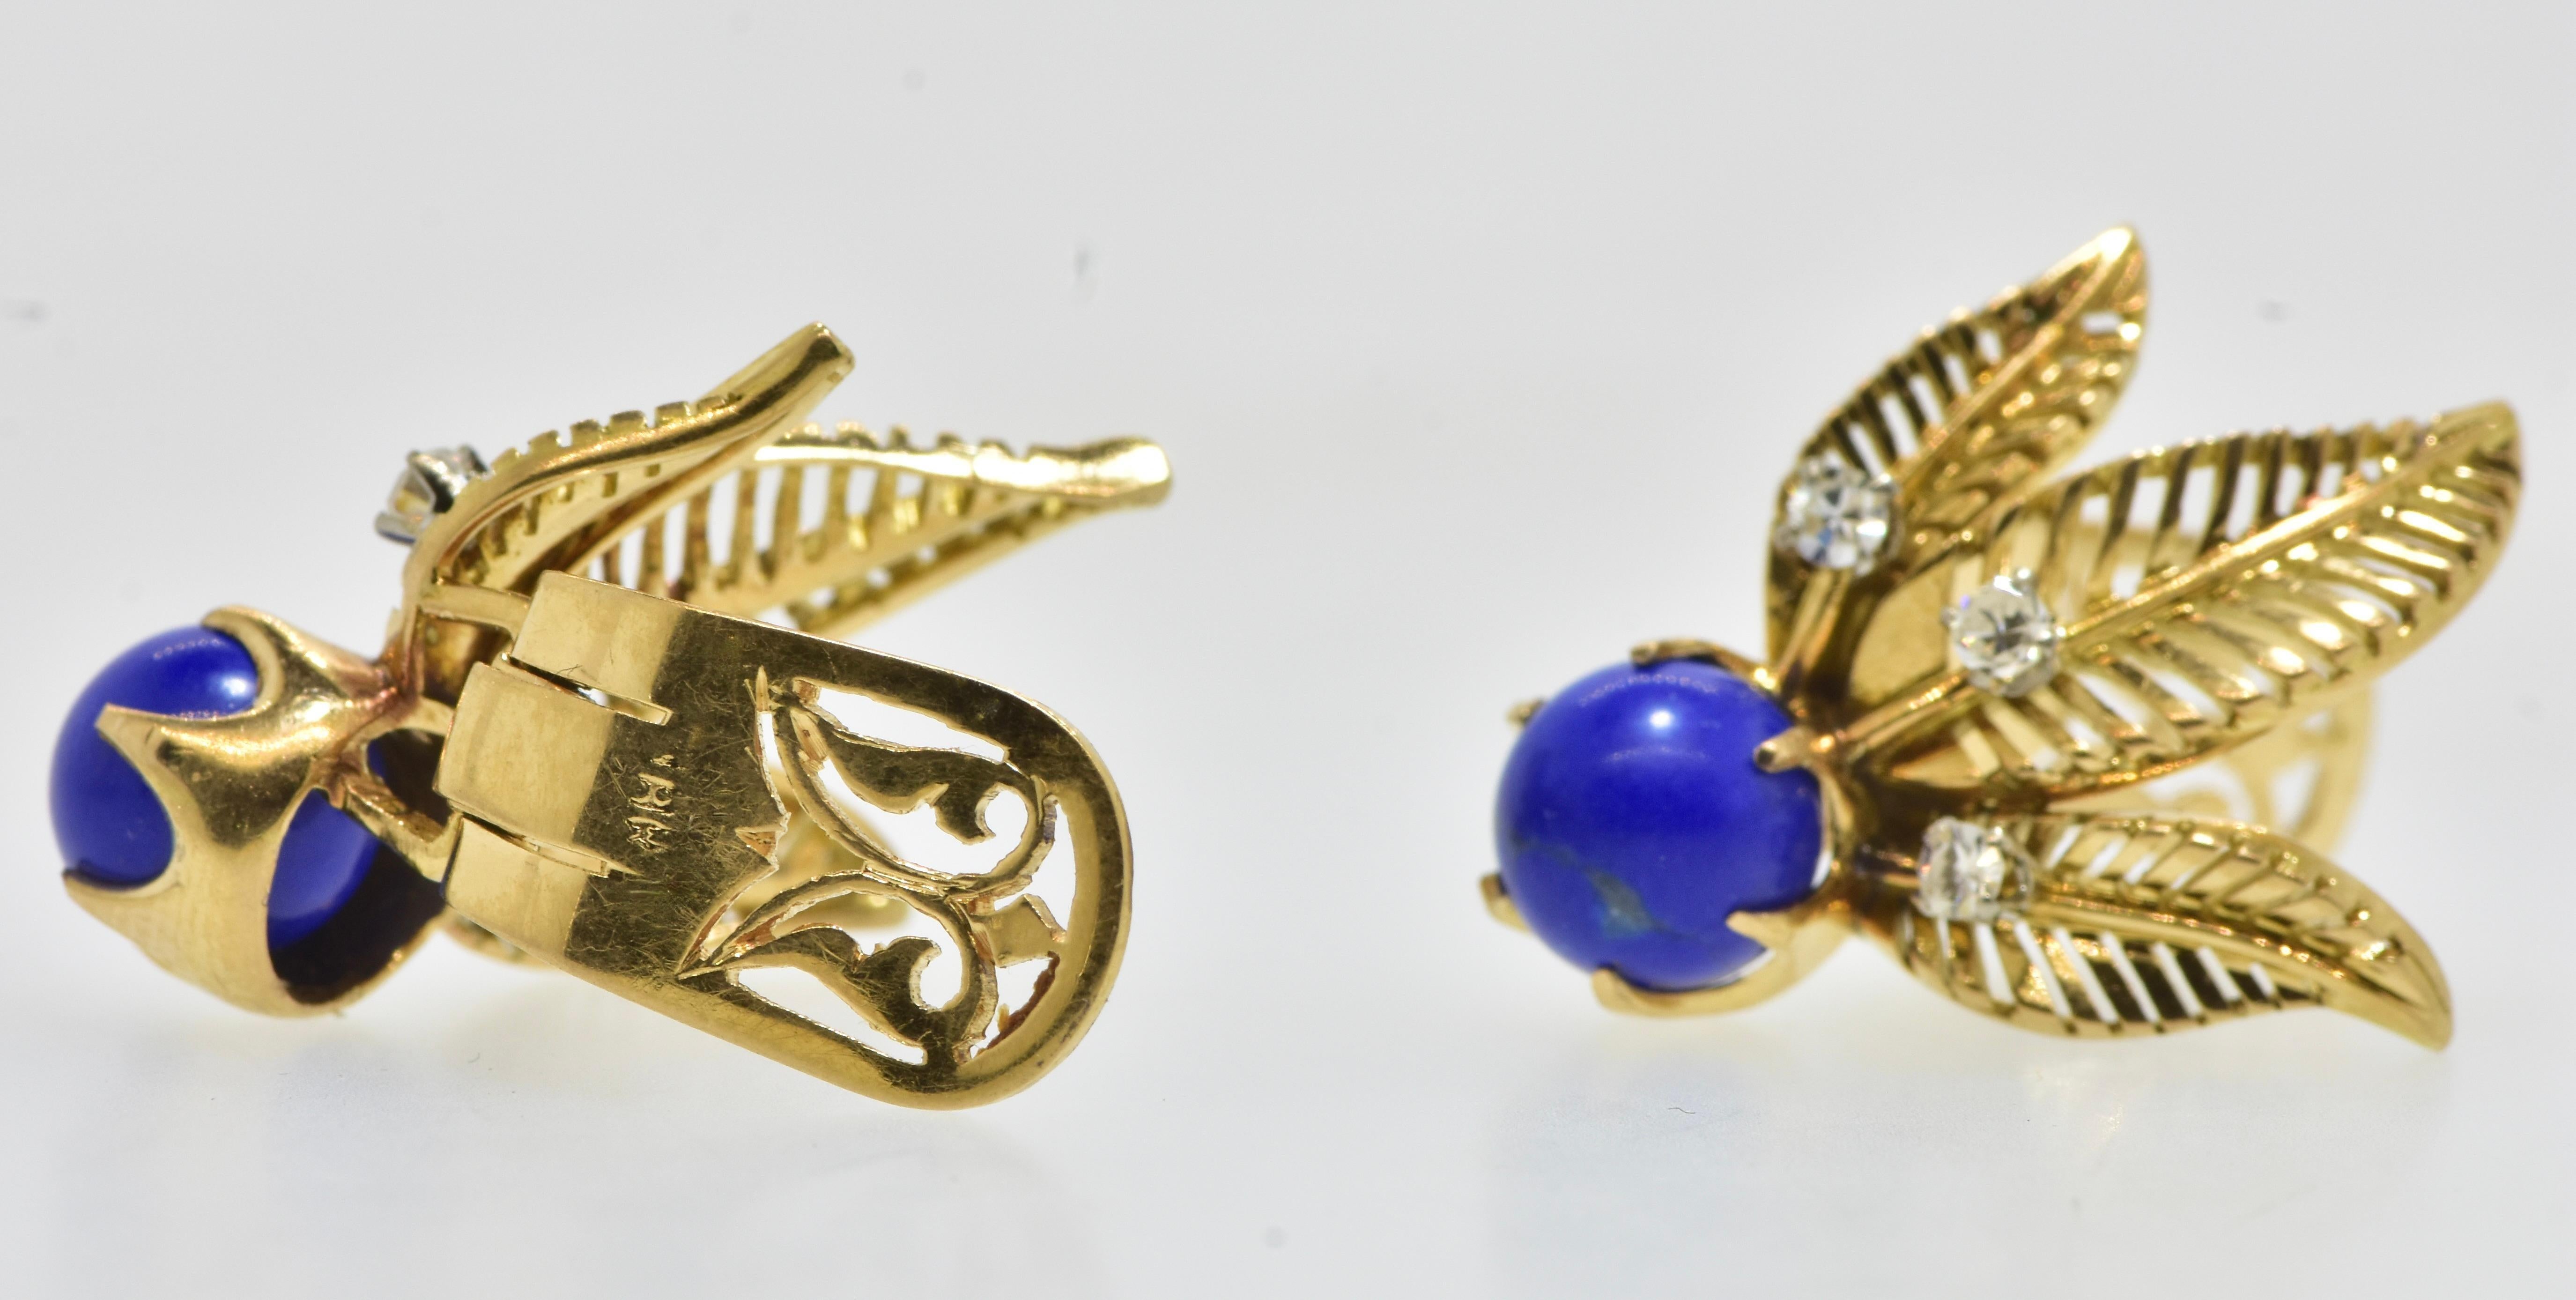  18K Yellow Gold, Fine Lapis Lazuli and White Diamond Earrings, c. 1950. For Sale 1